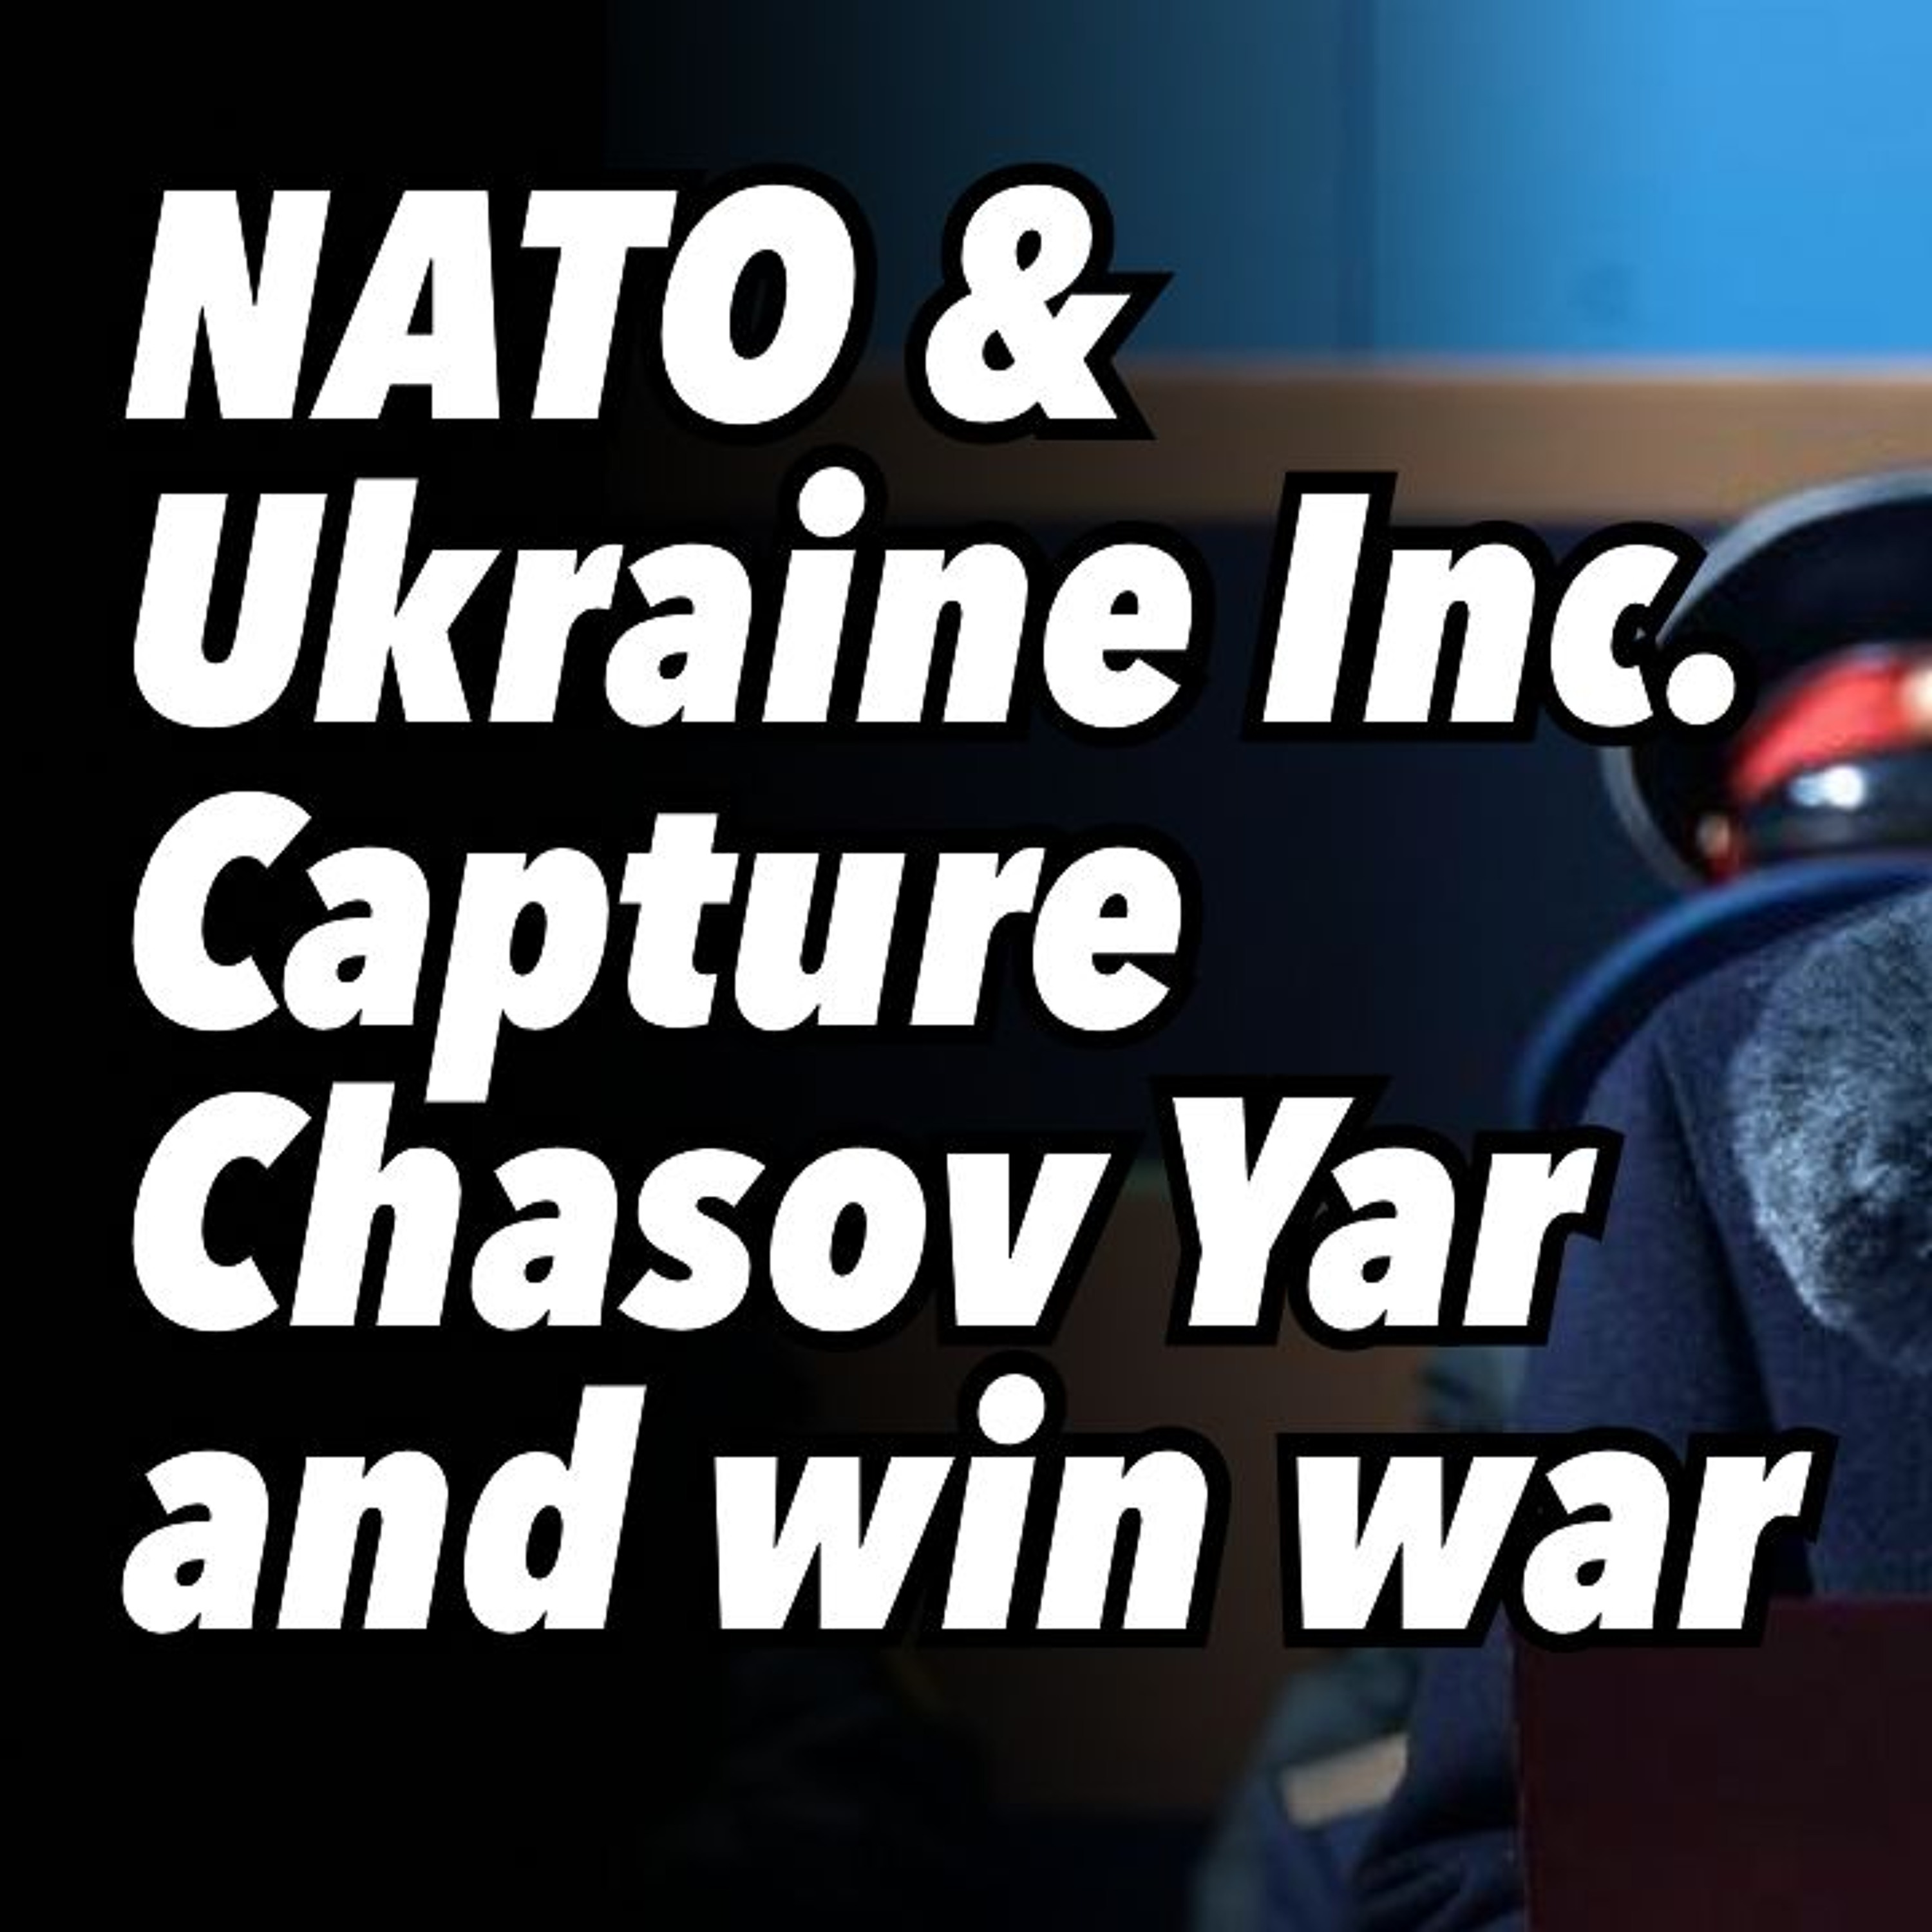 NATO & Ukraine Inc. Capture Chasov Yar and win war